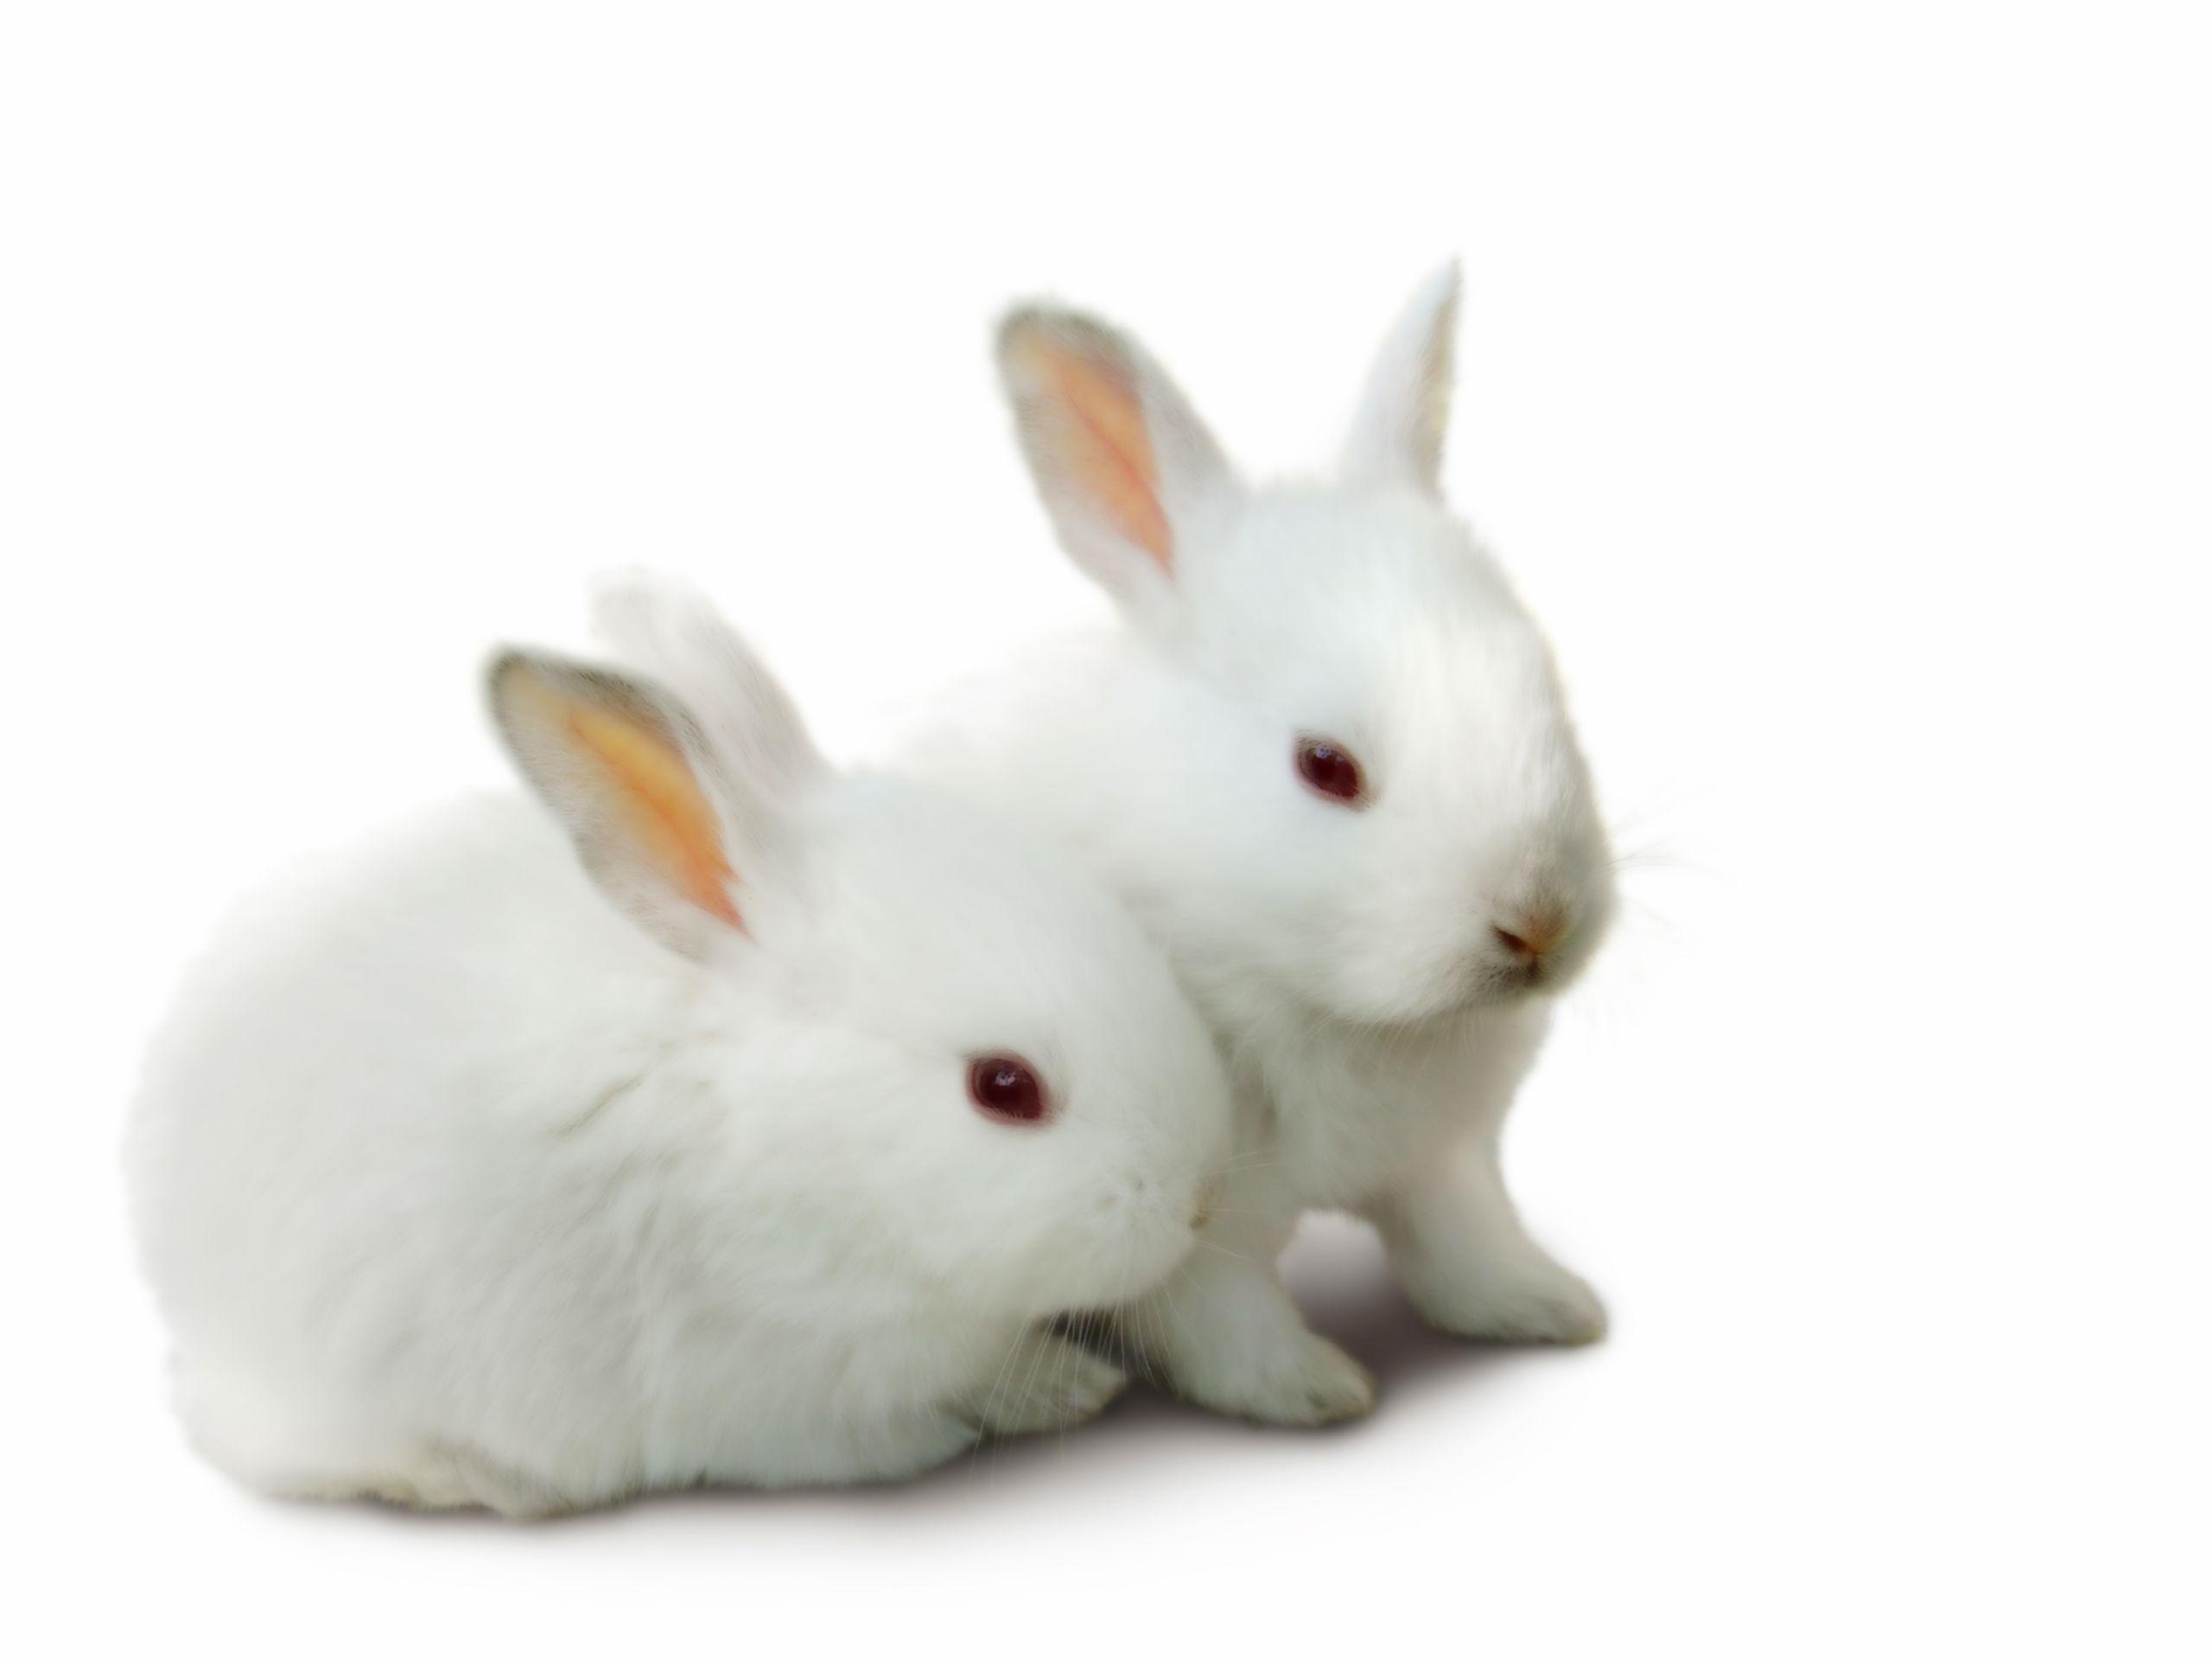 Animals For > Cute Rabbits Wallpaper For Desktop